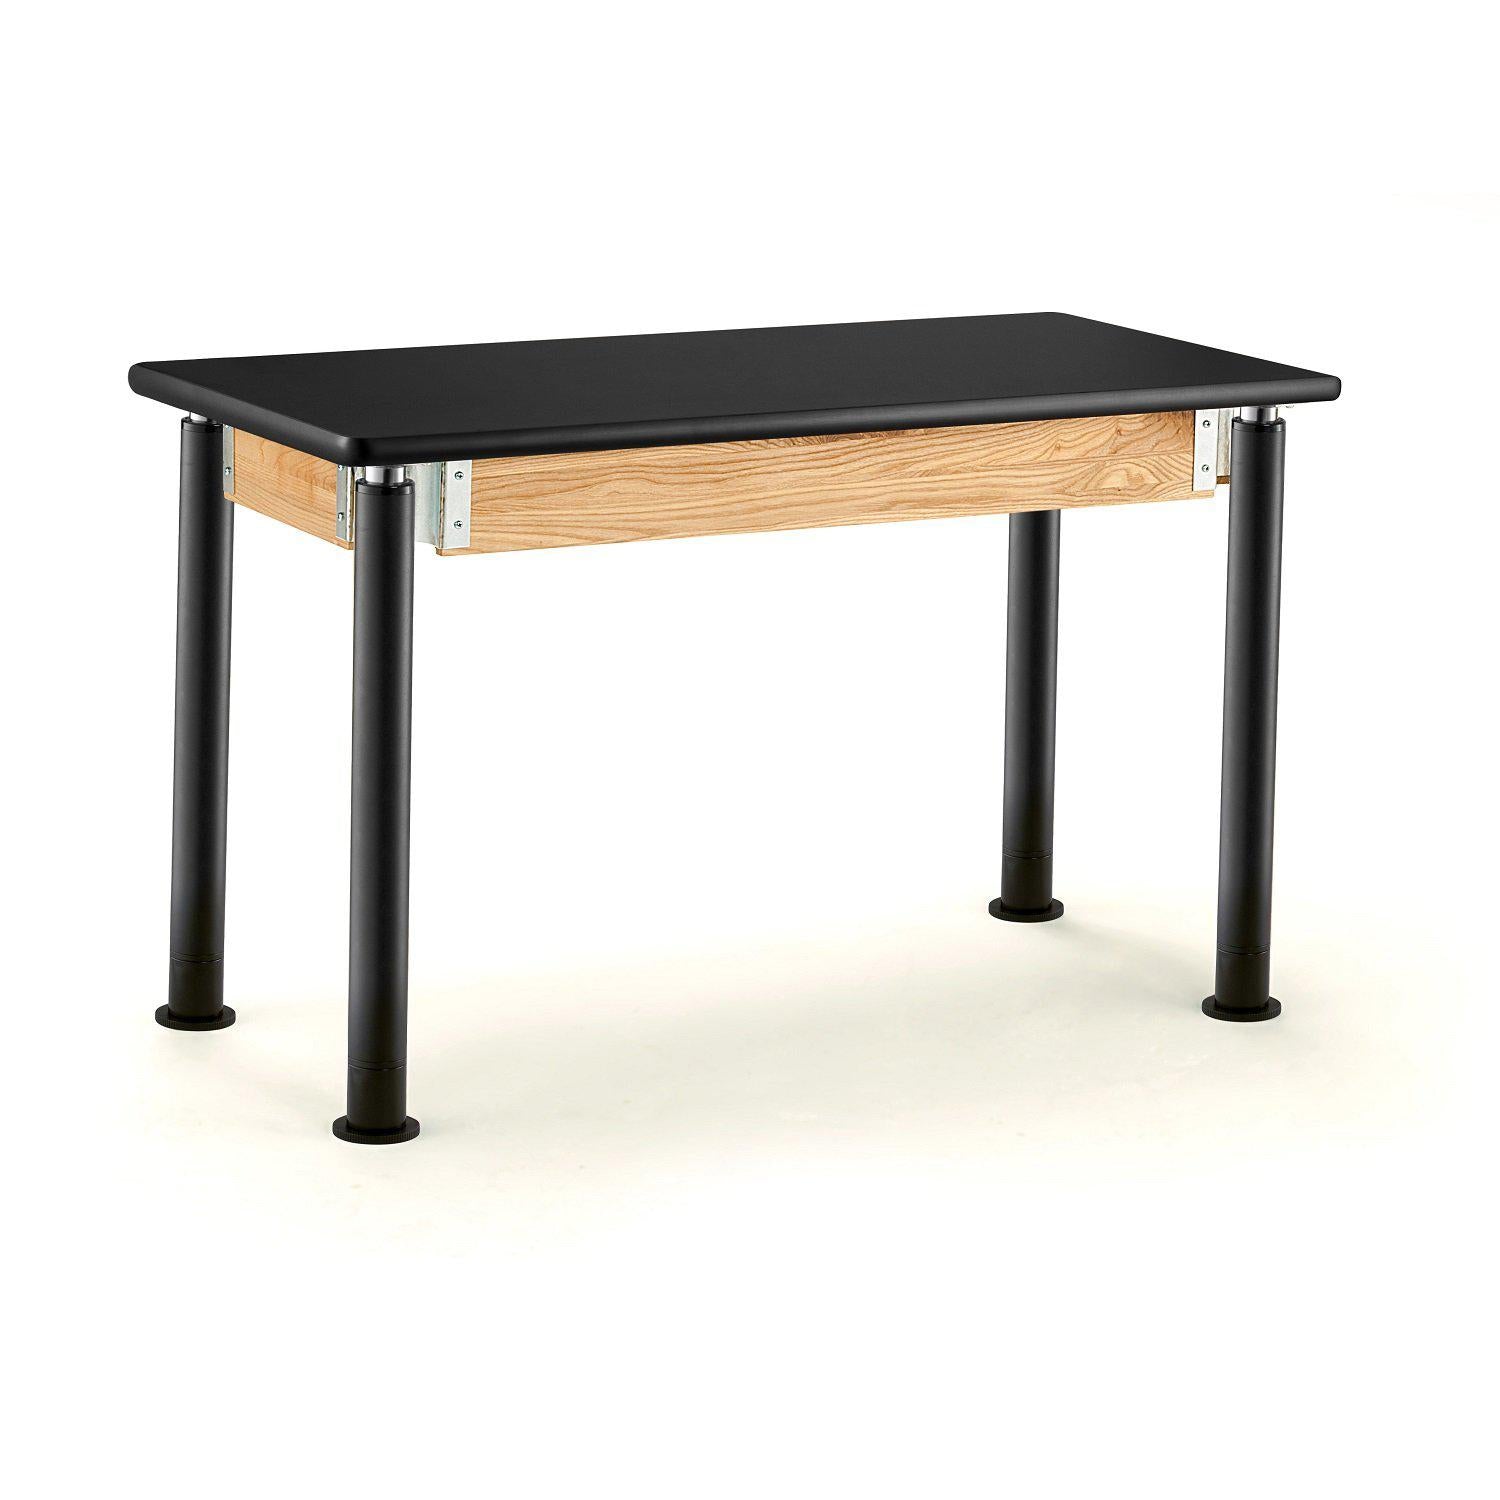 Signature Series Adjustable Height Science Lab Table, Textured Black Legs, 24"x48", Black High Pressure Laminate Top